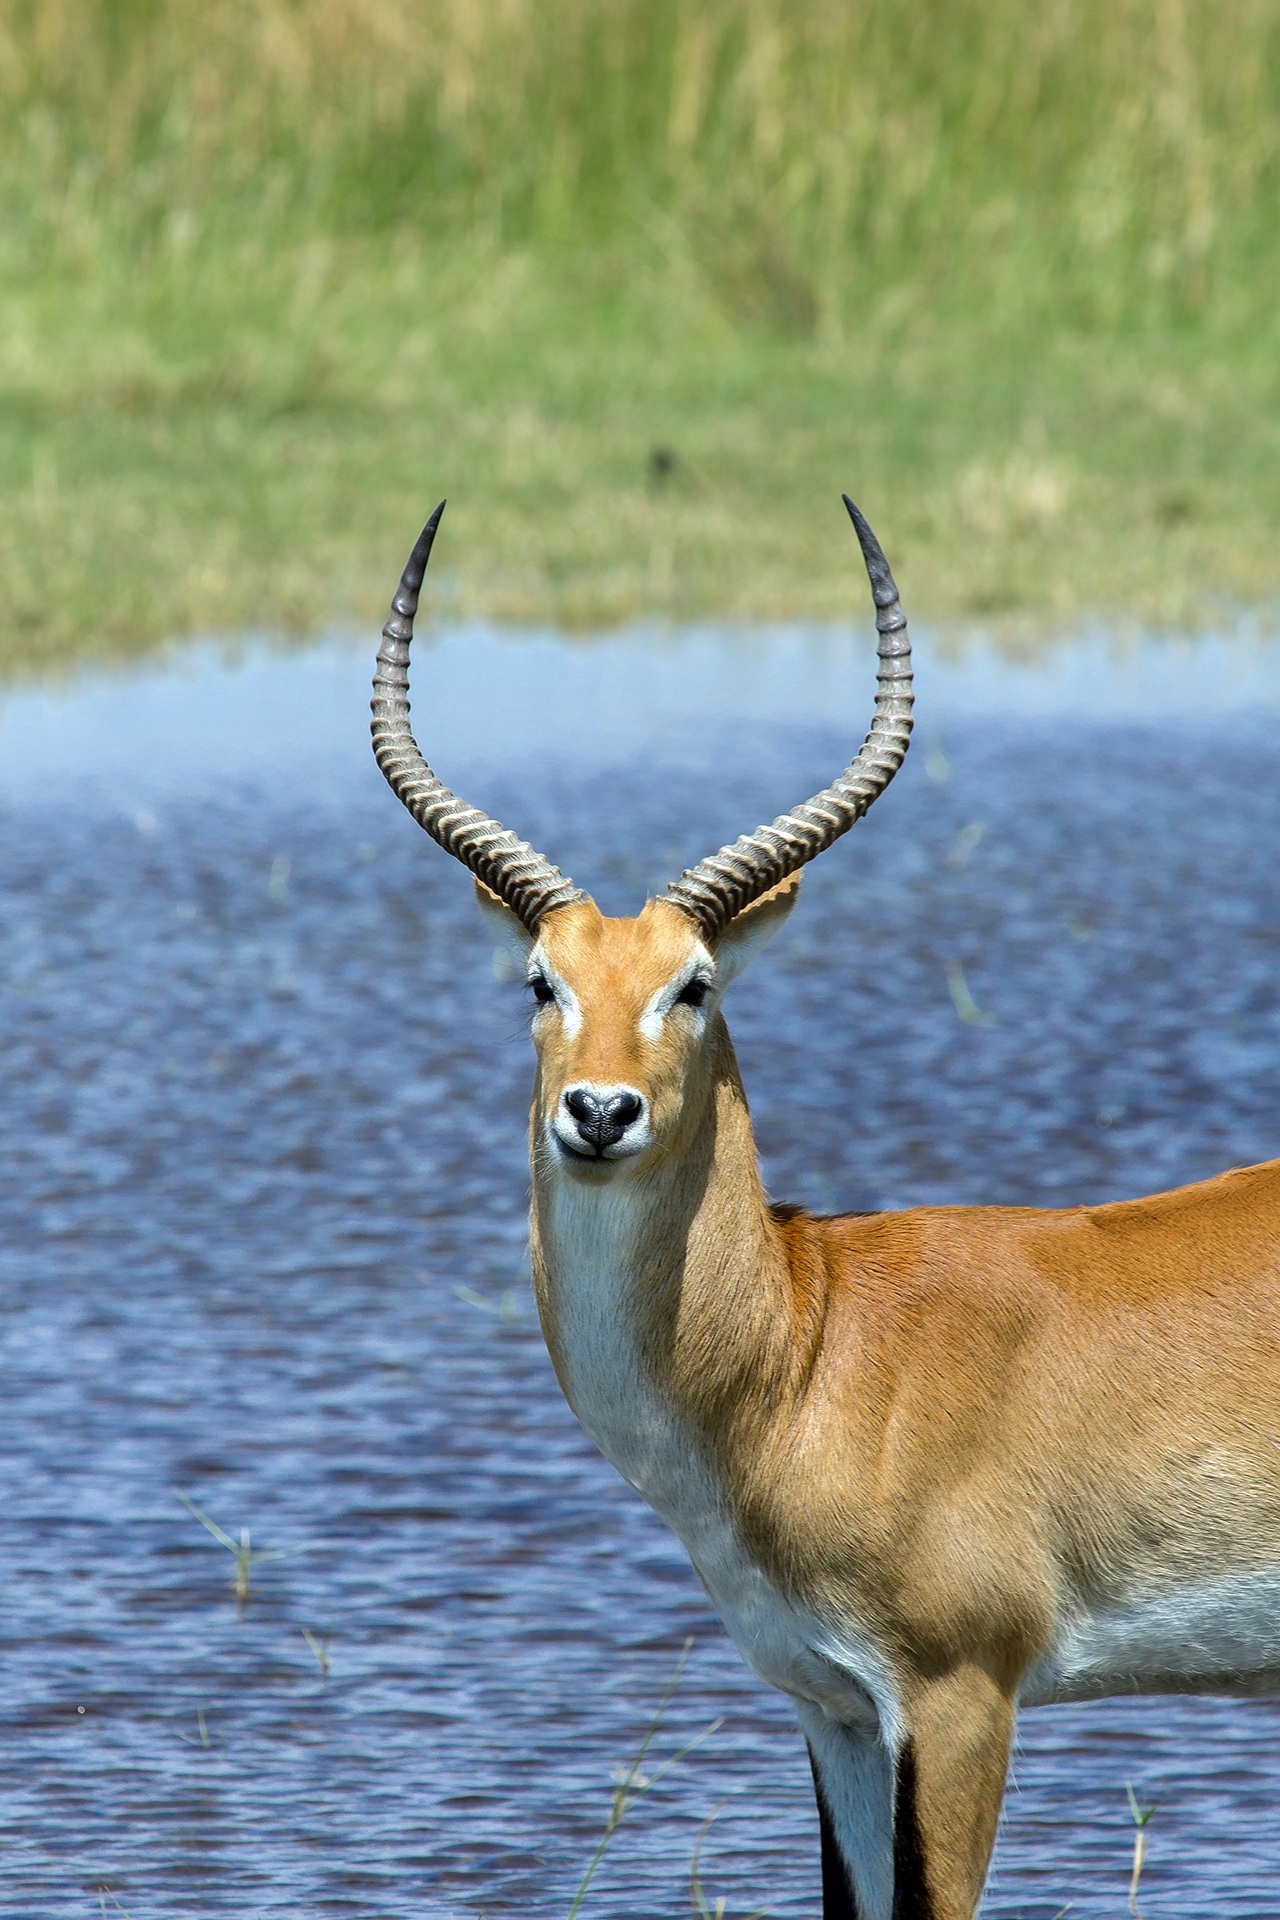 A male Uganda kob with antlers